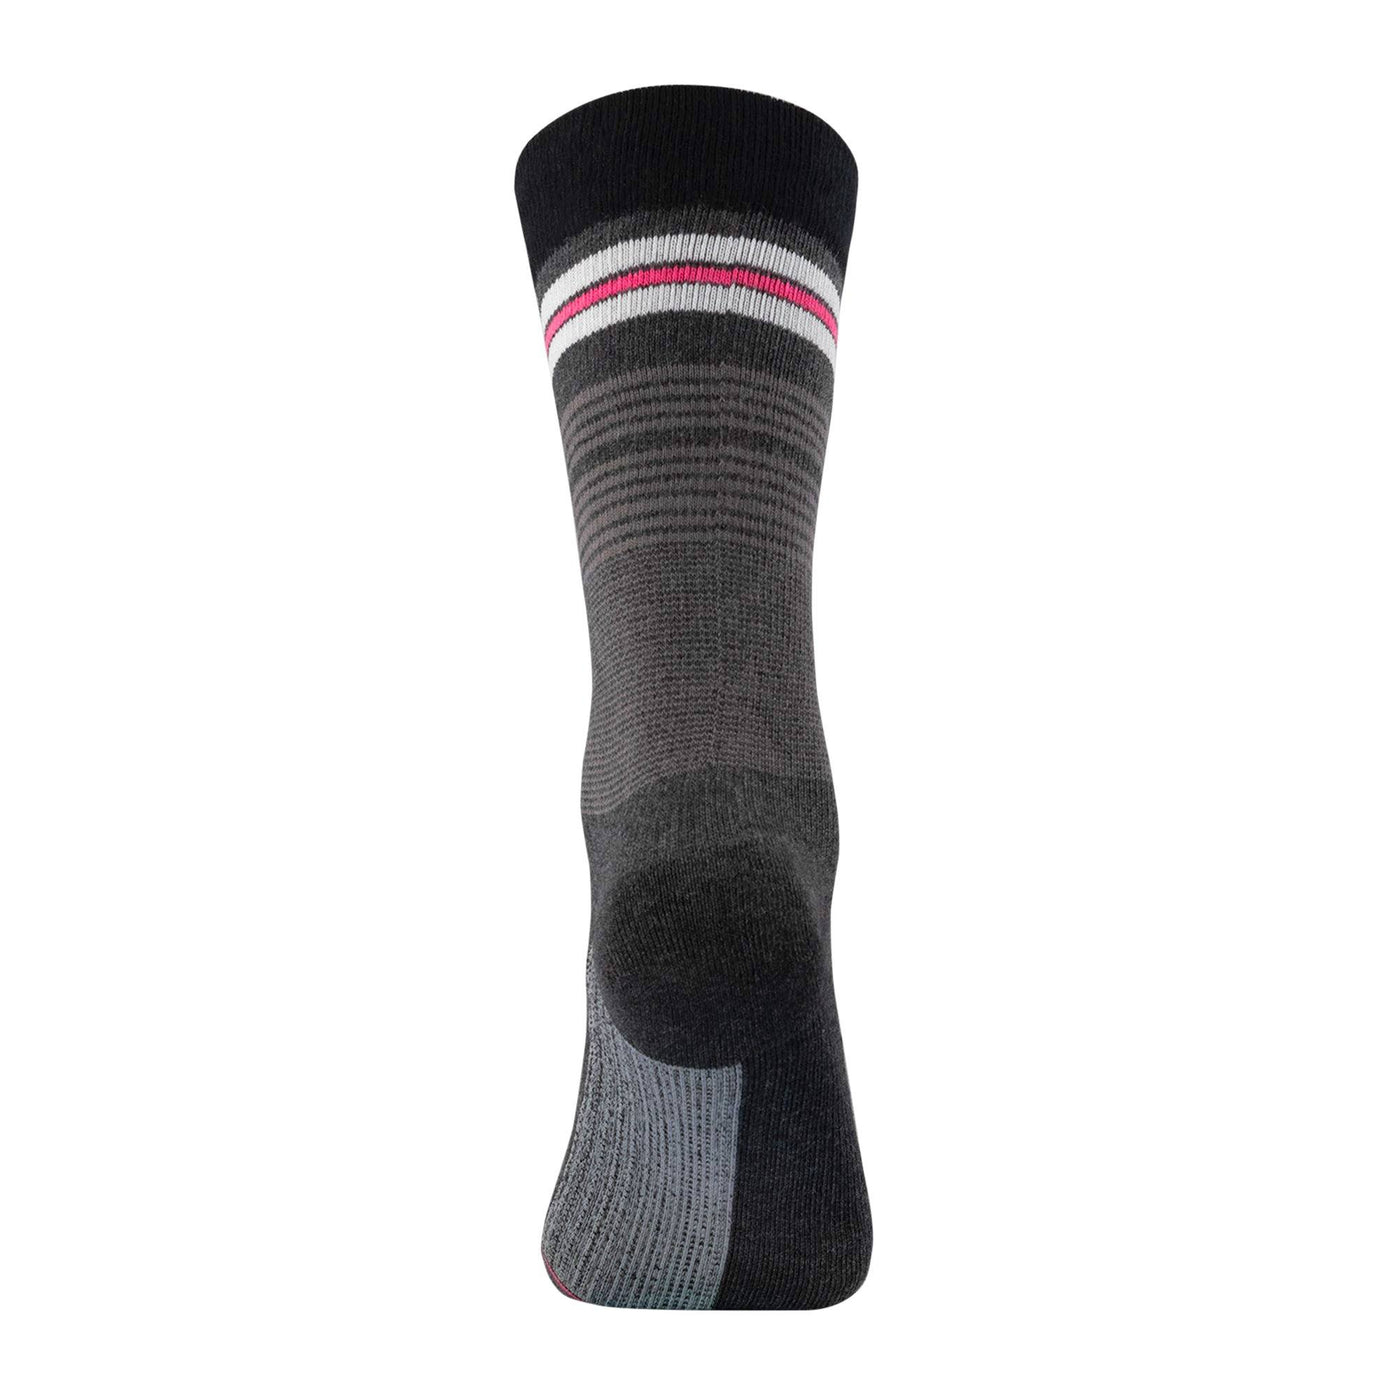 Dark Grey/Slate Heather Dress Sock dress socks ArchTek